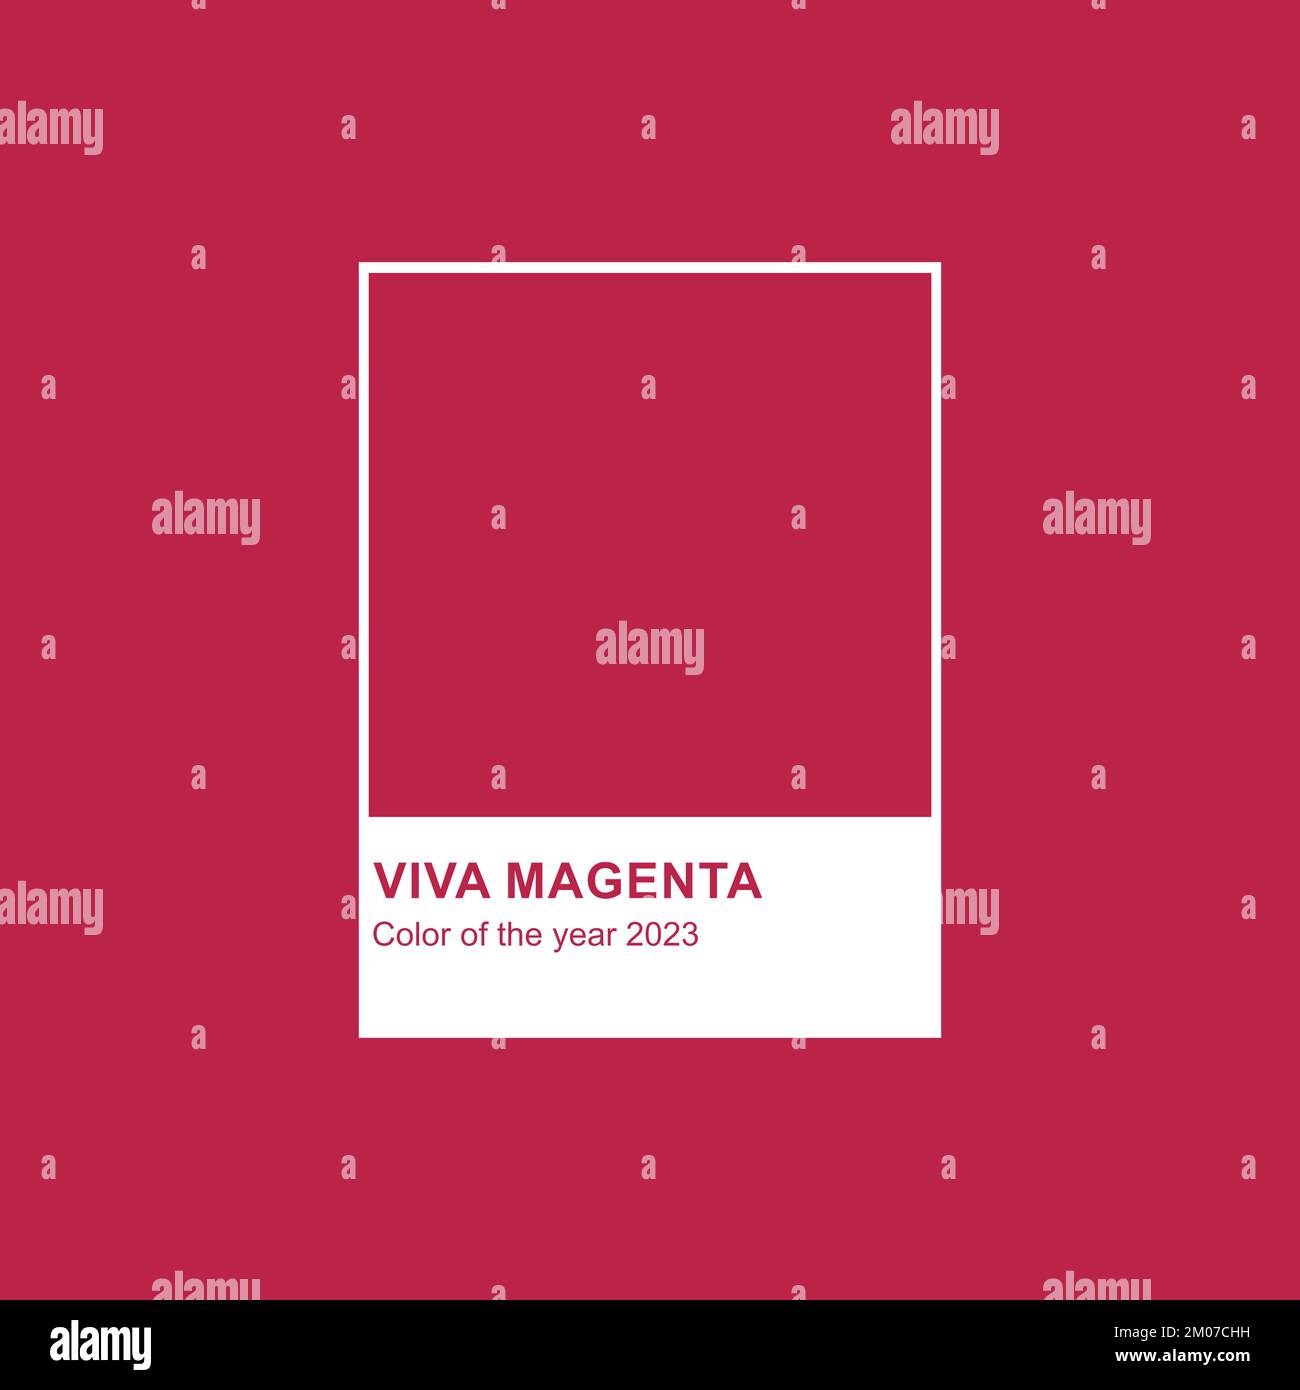 How to Splash Viva Magenta in Your Interiors - Square Feet Story